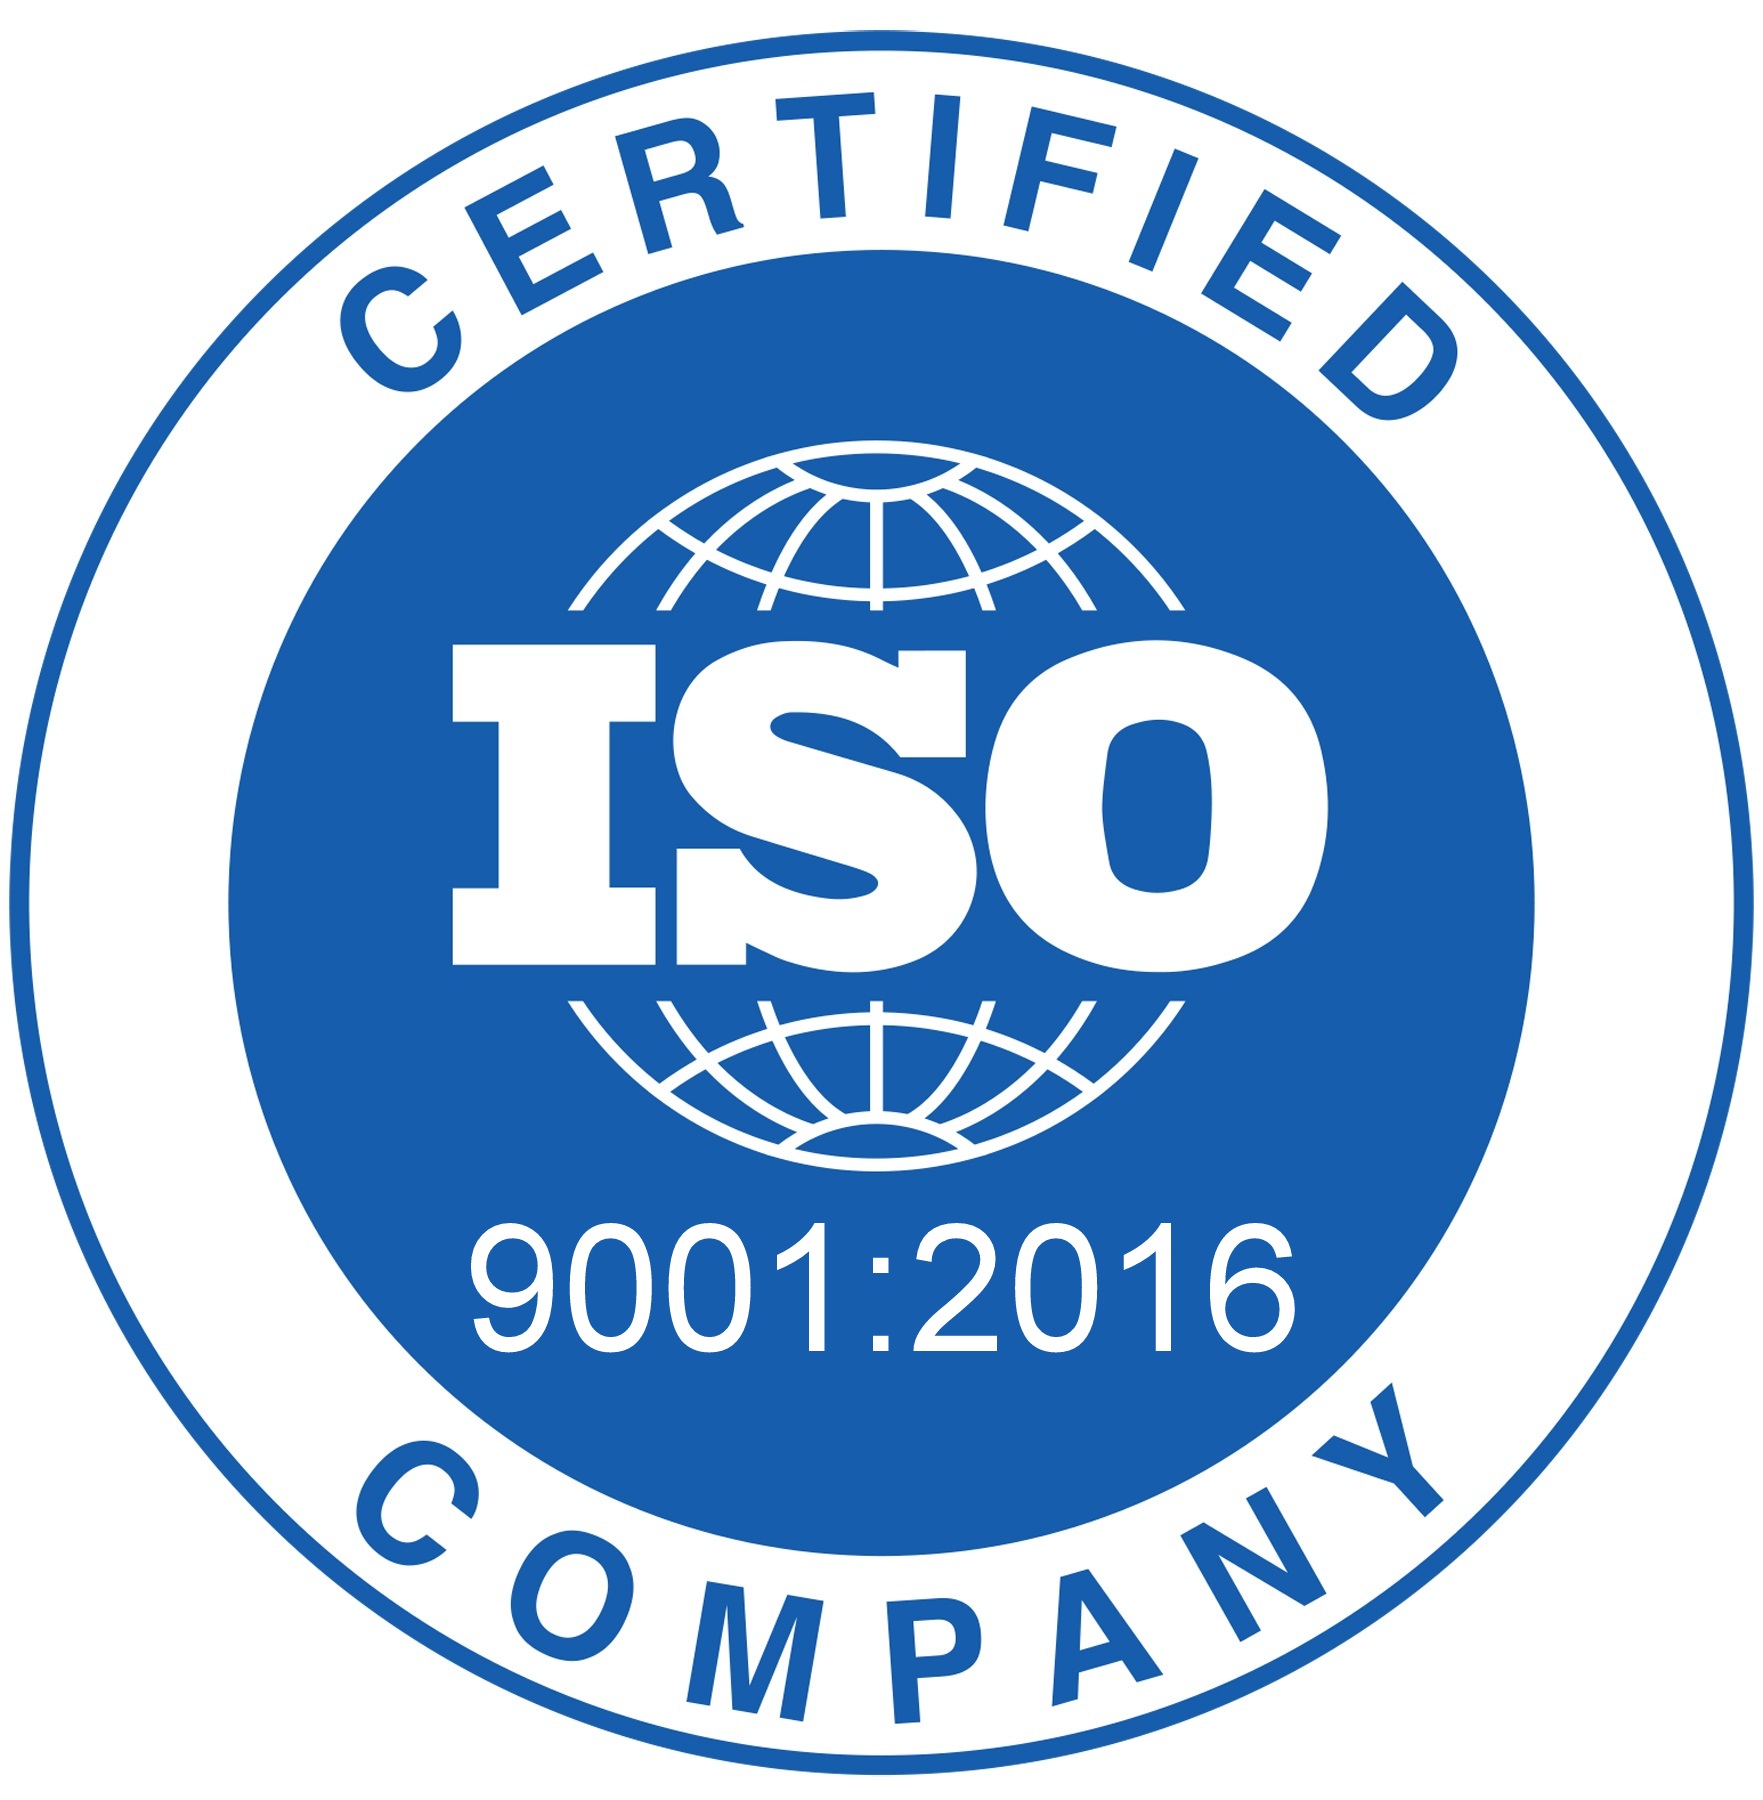 Image ISO certifikat